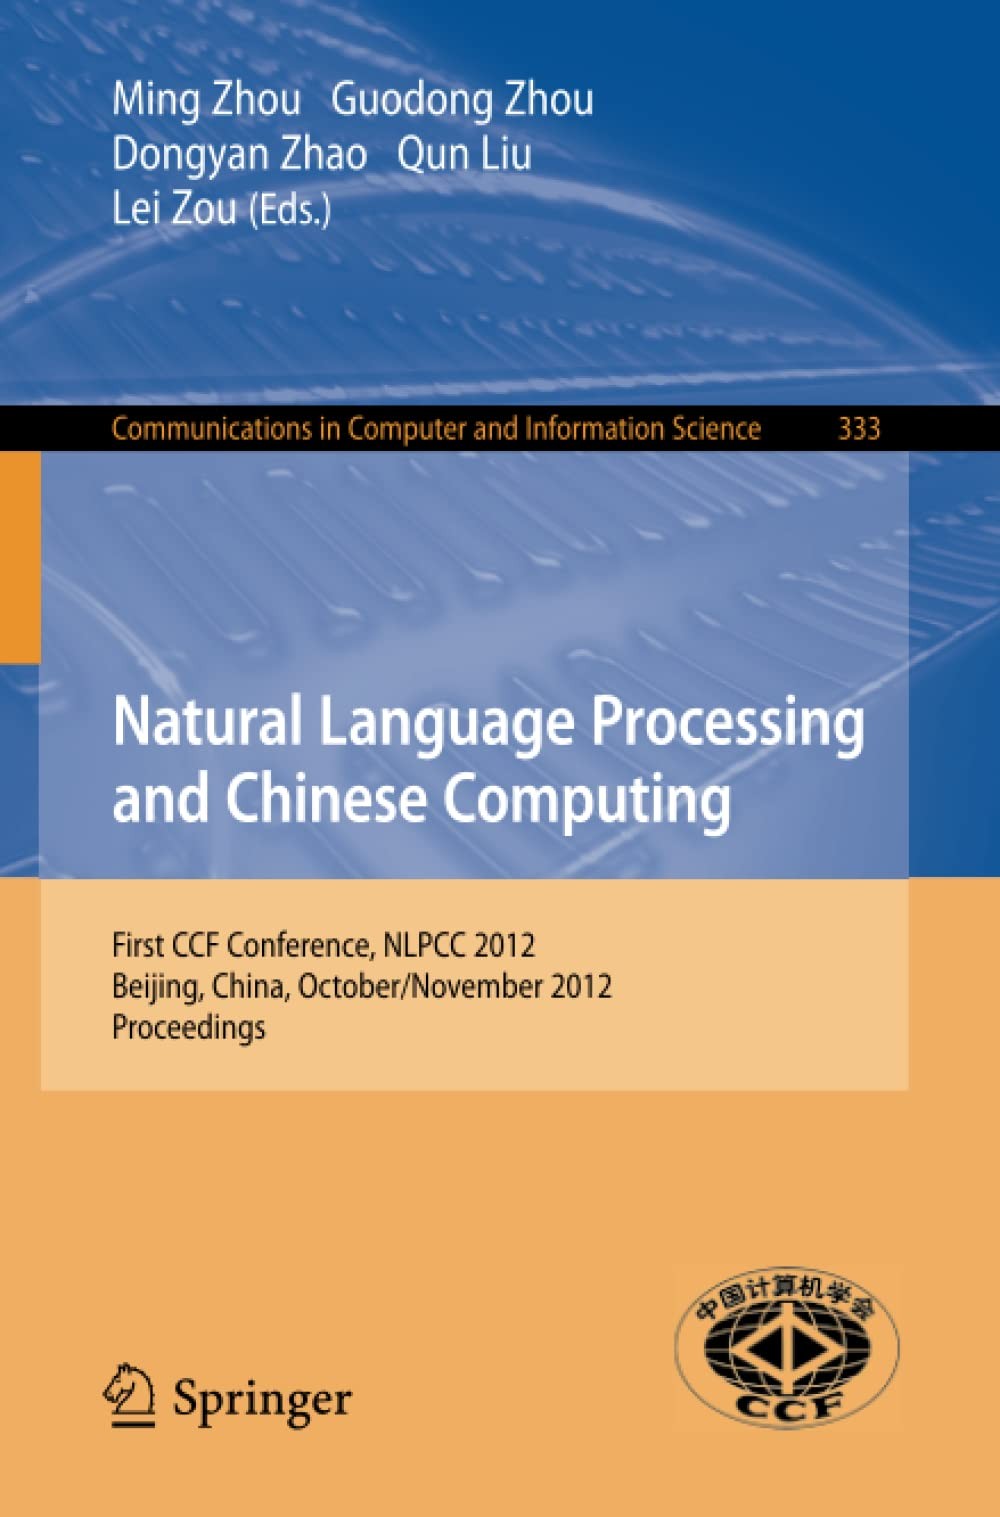 Natural Language Processing and Chinese Computing: First CCF Conference, NLPCC 2012, Beijing, China, October 31-November 5, 2012. Proceedings